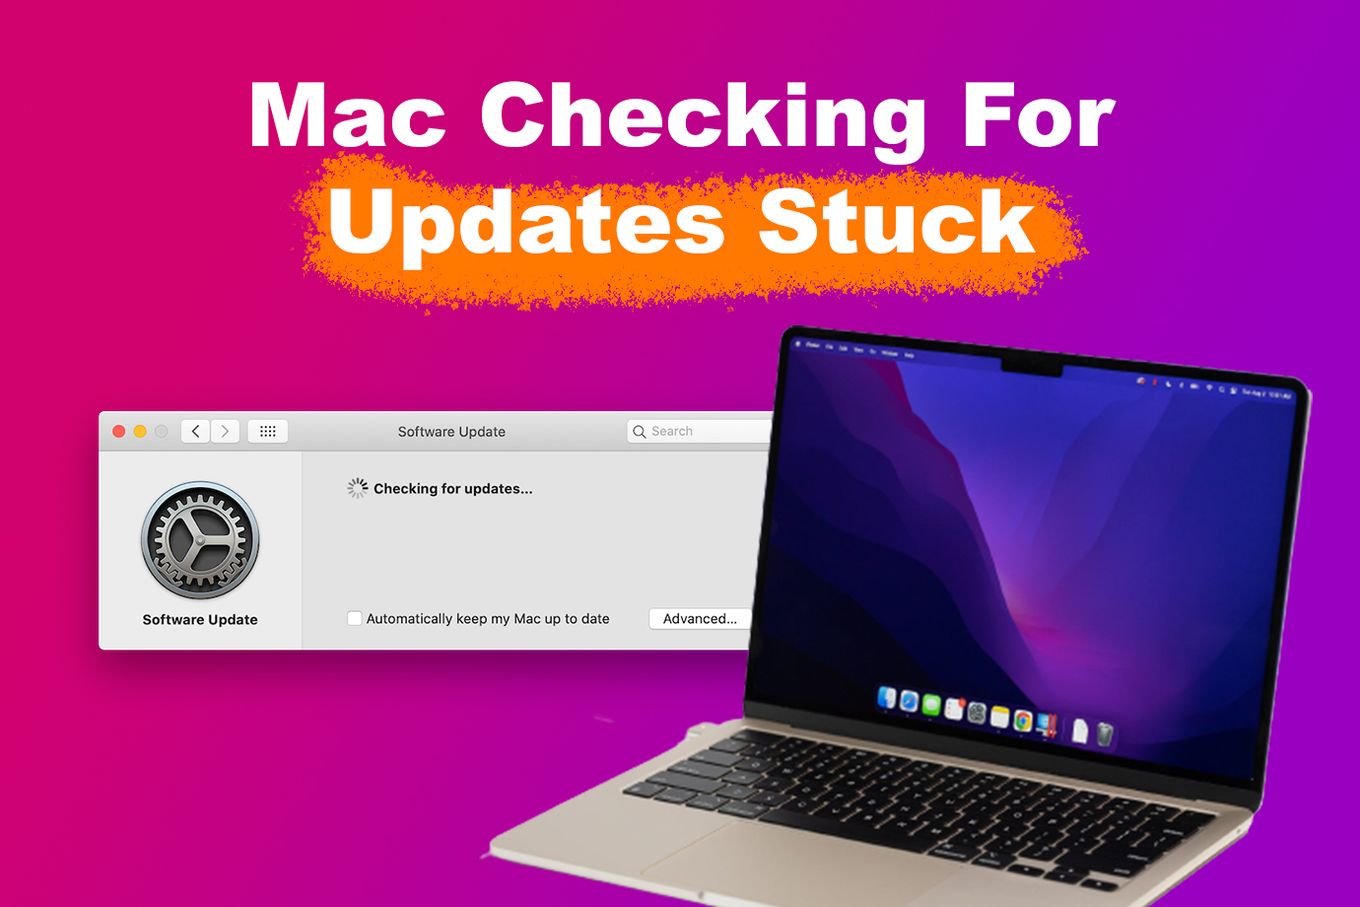 Mac Checking For Updates Stuck